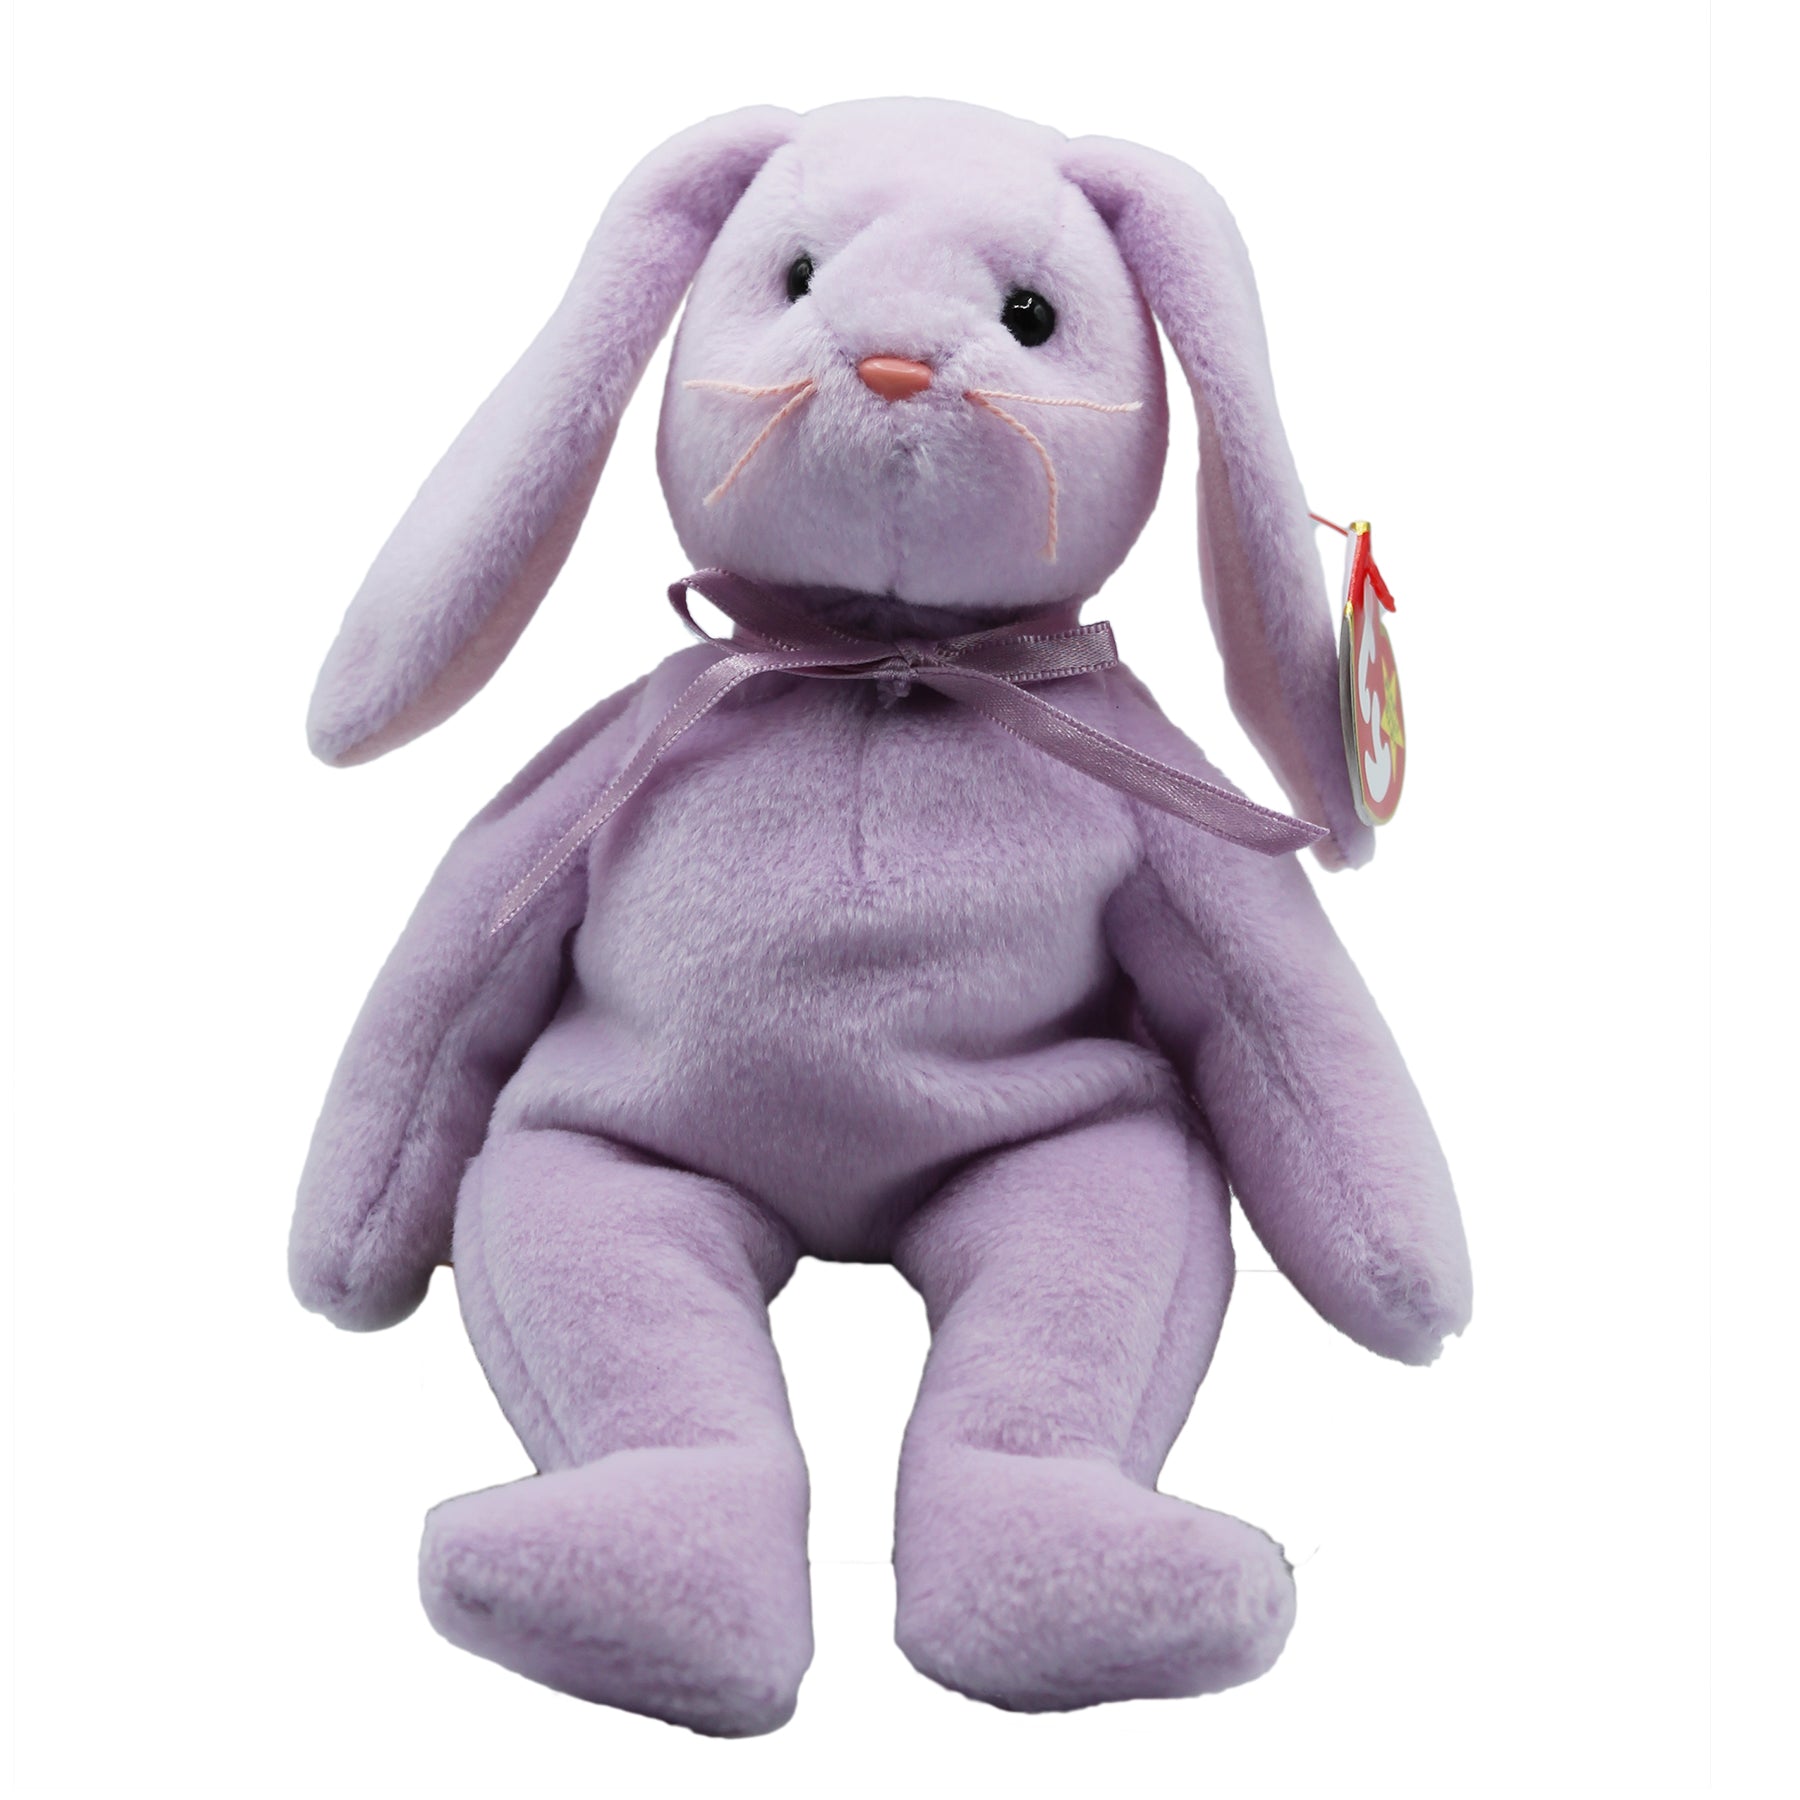 Ty Beanie Baby: Floppity the Rabbit